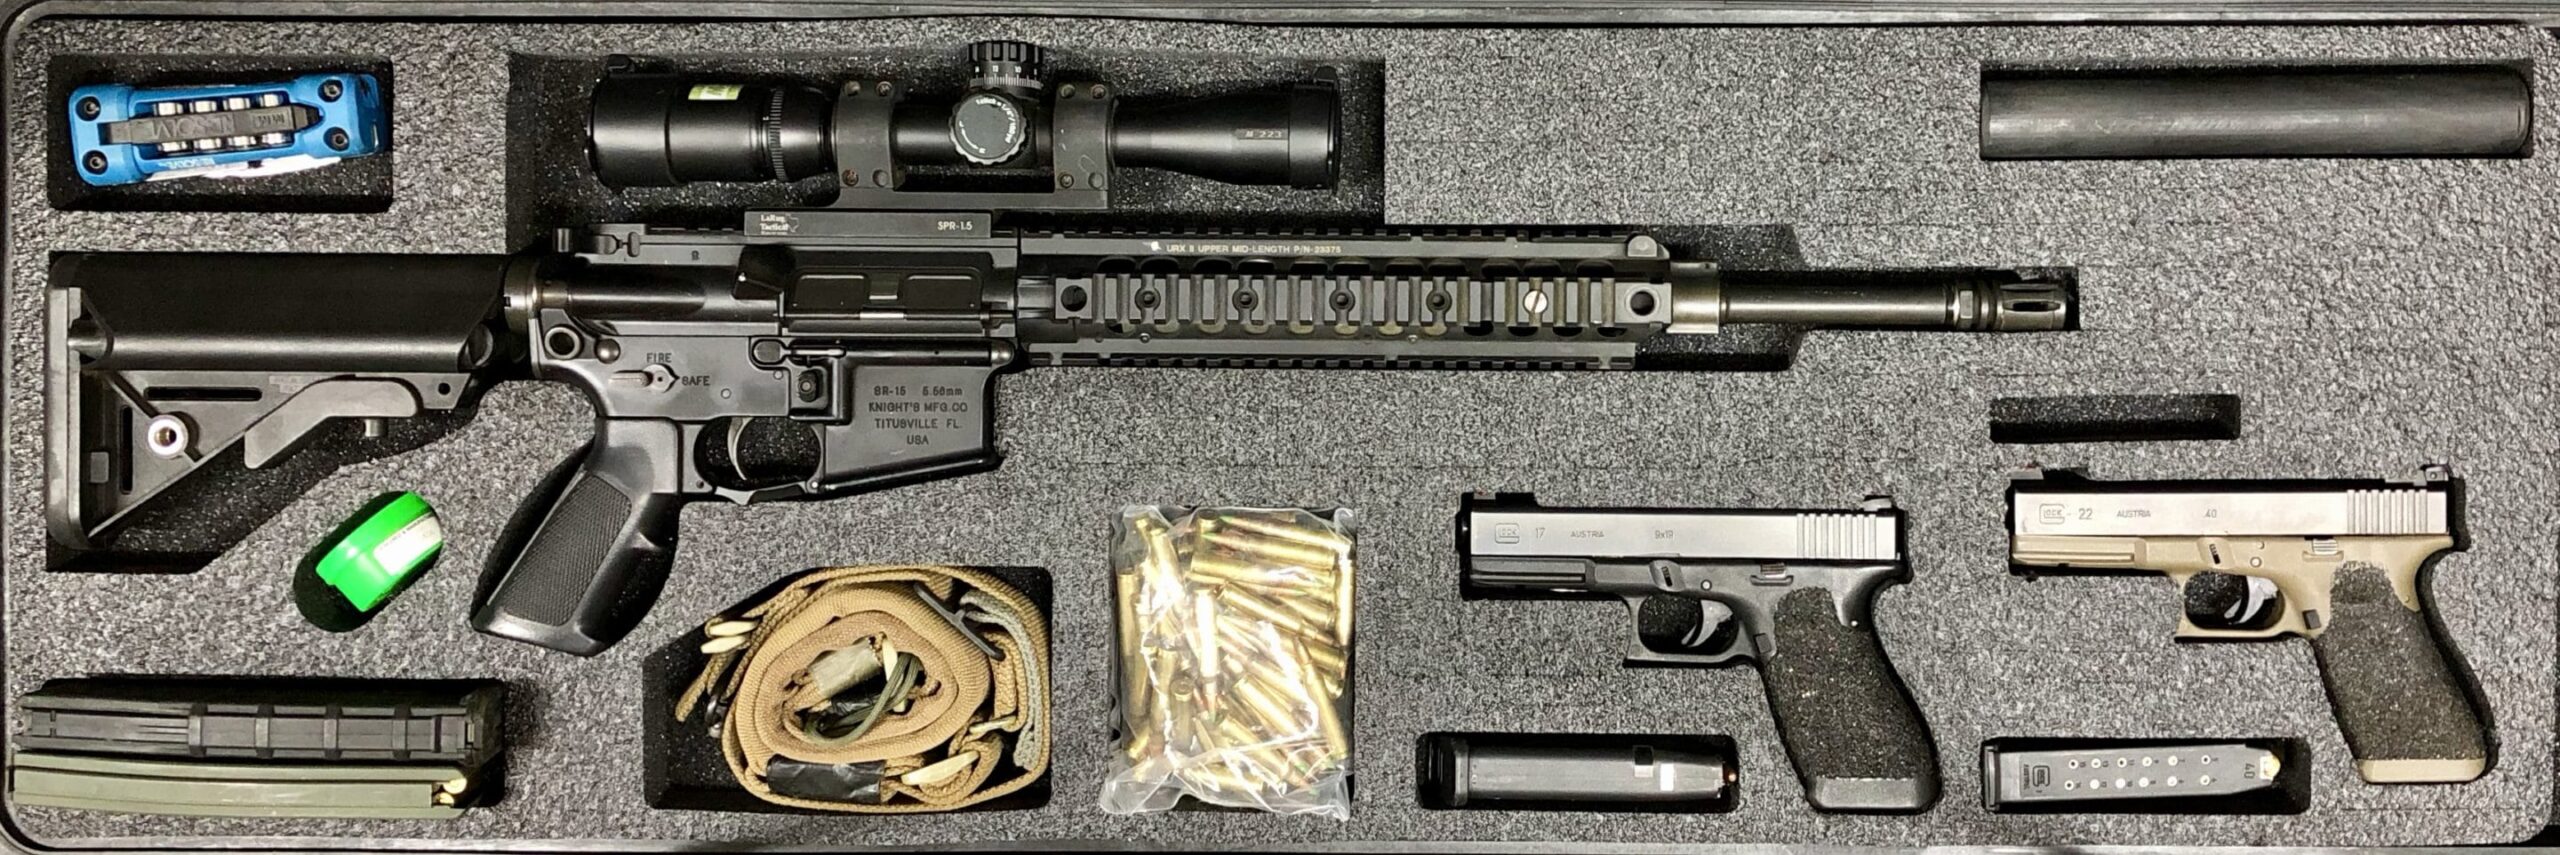 GUNFORMZ Pistol Apache A4800 V5 - Gunformz - Semi Custom Foam Case